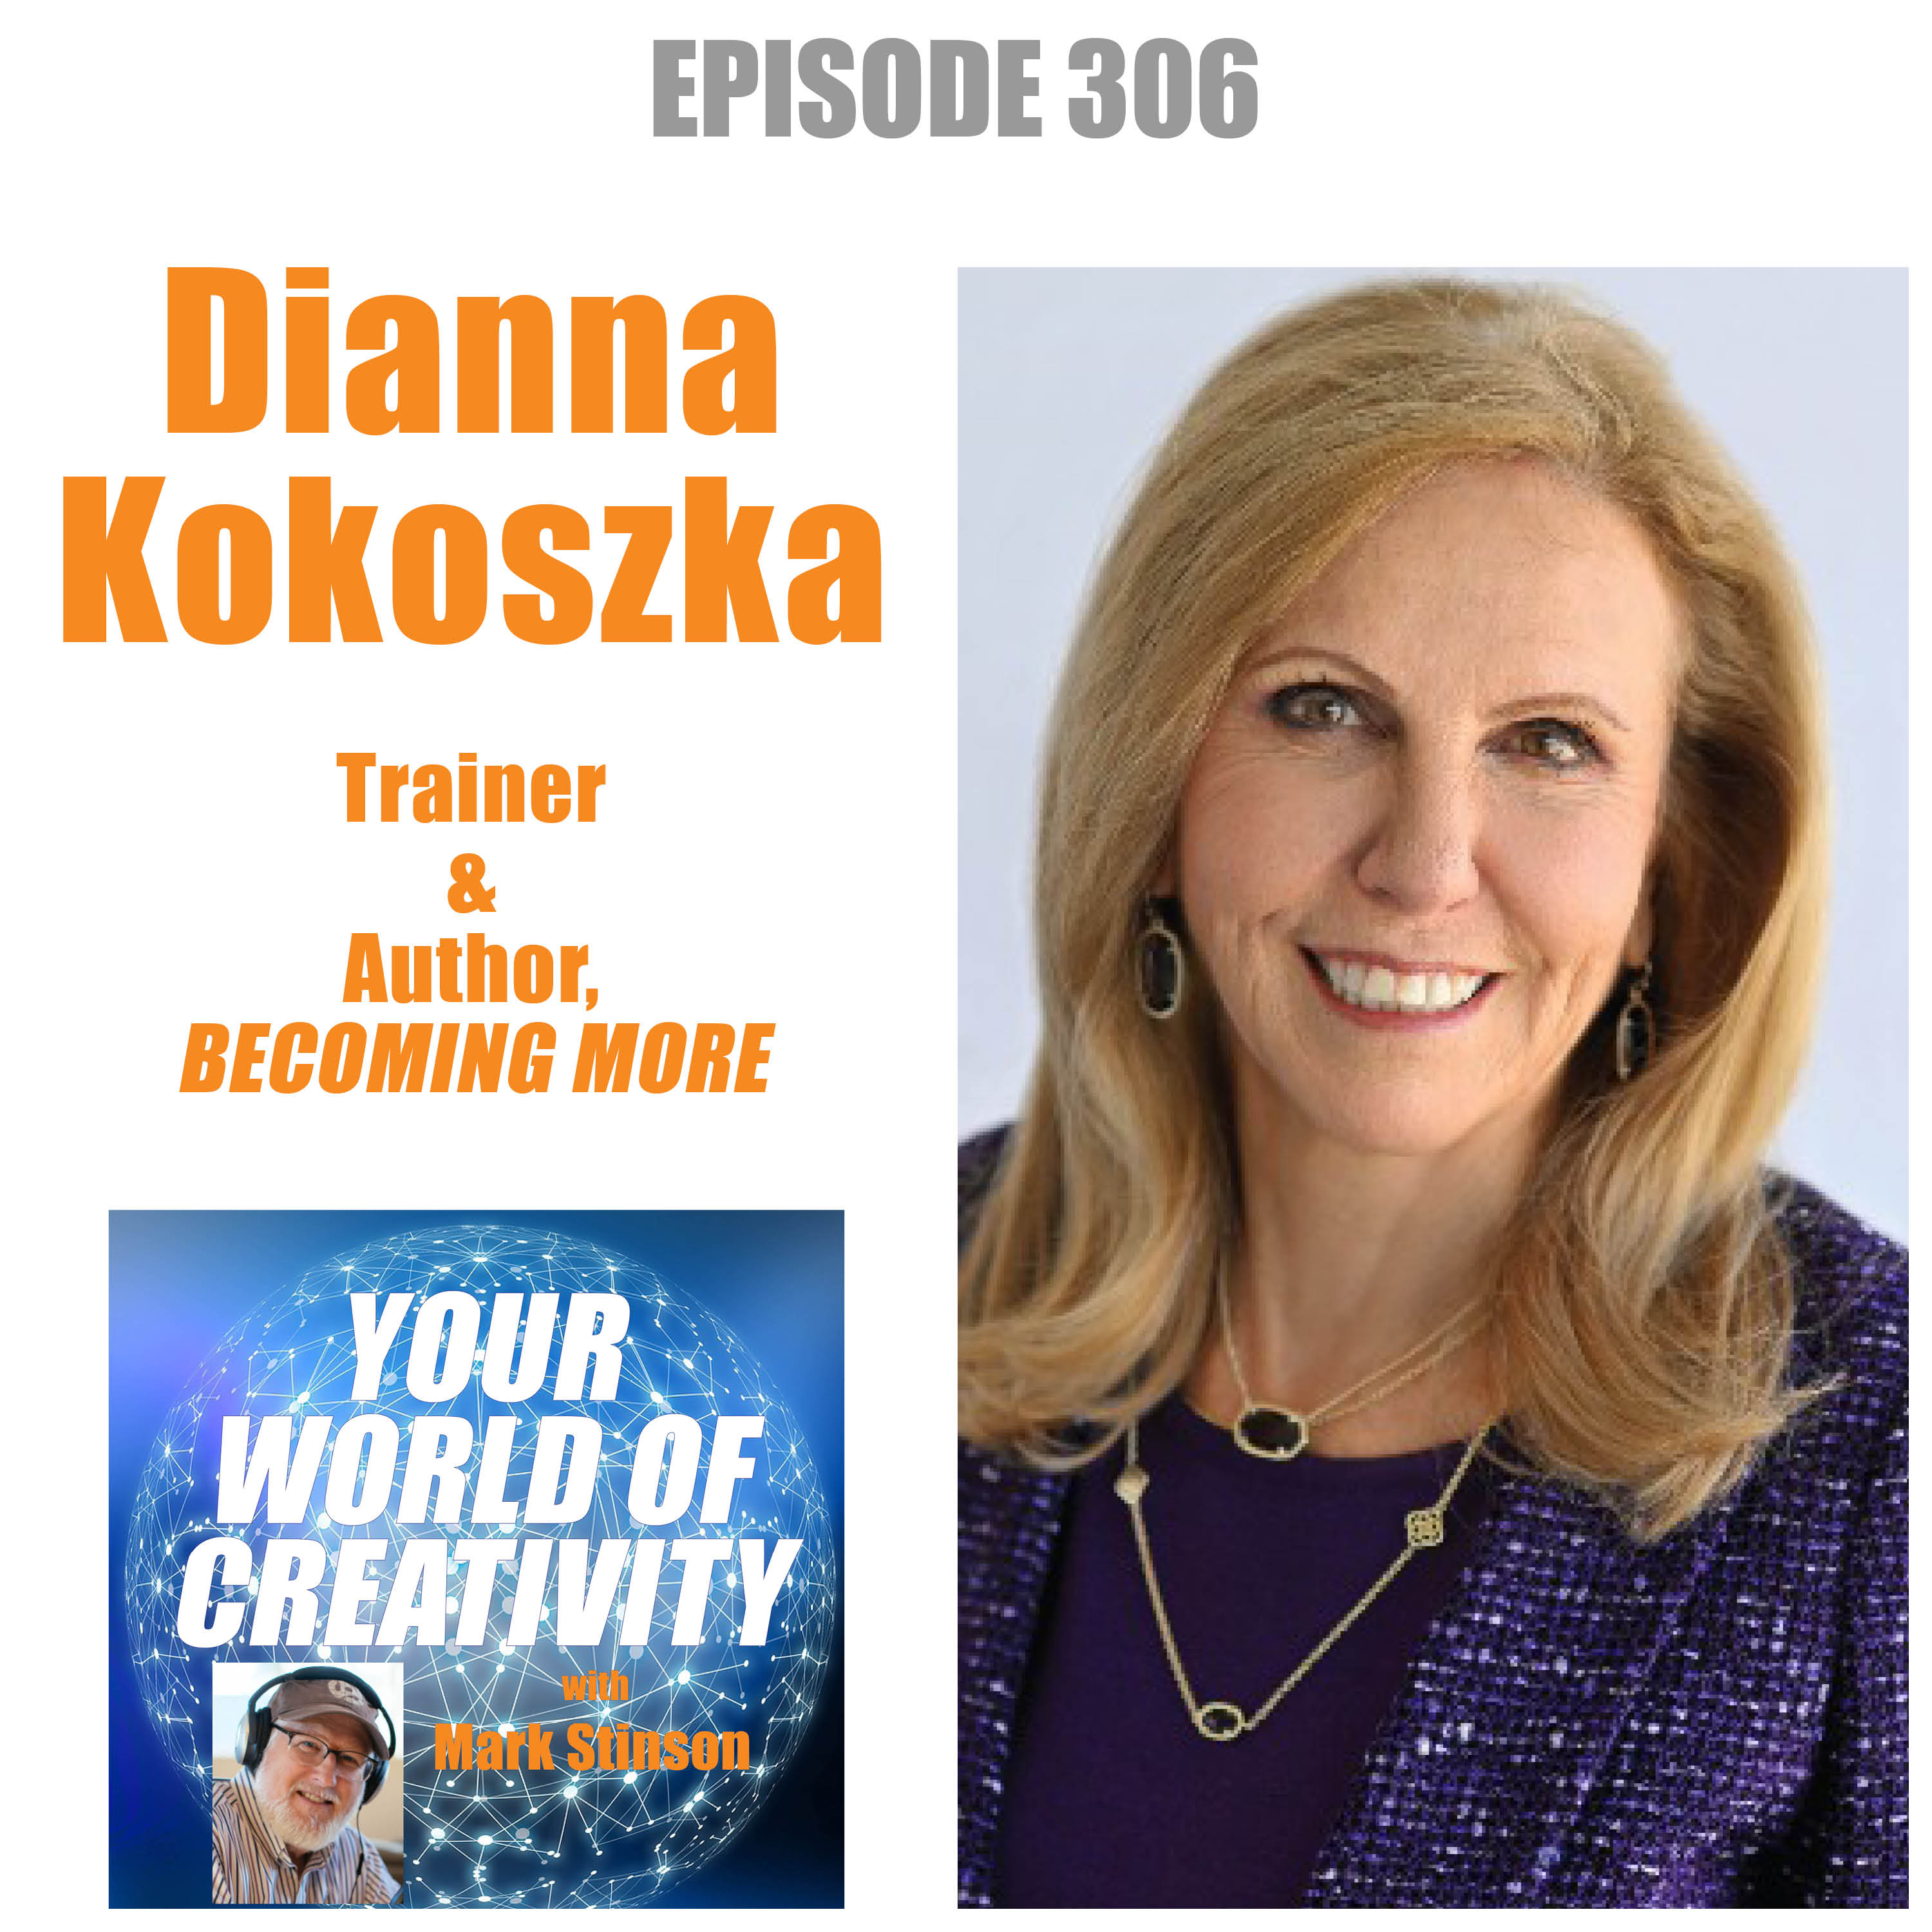 Dianna Kokoszka, Trainer and Author “Becoming More”